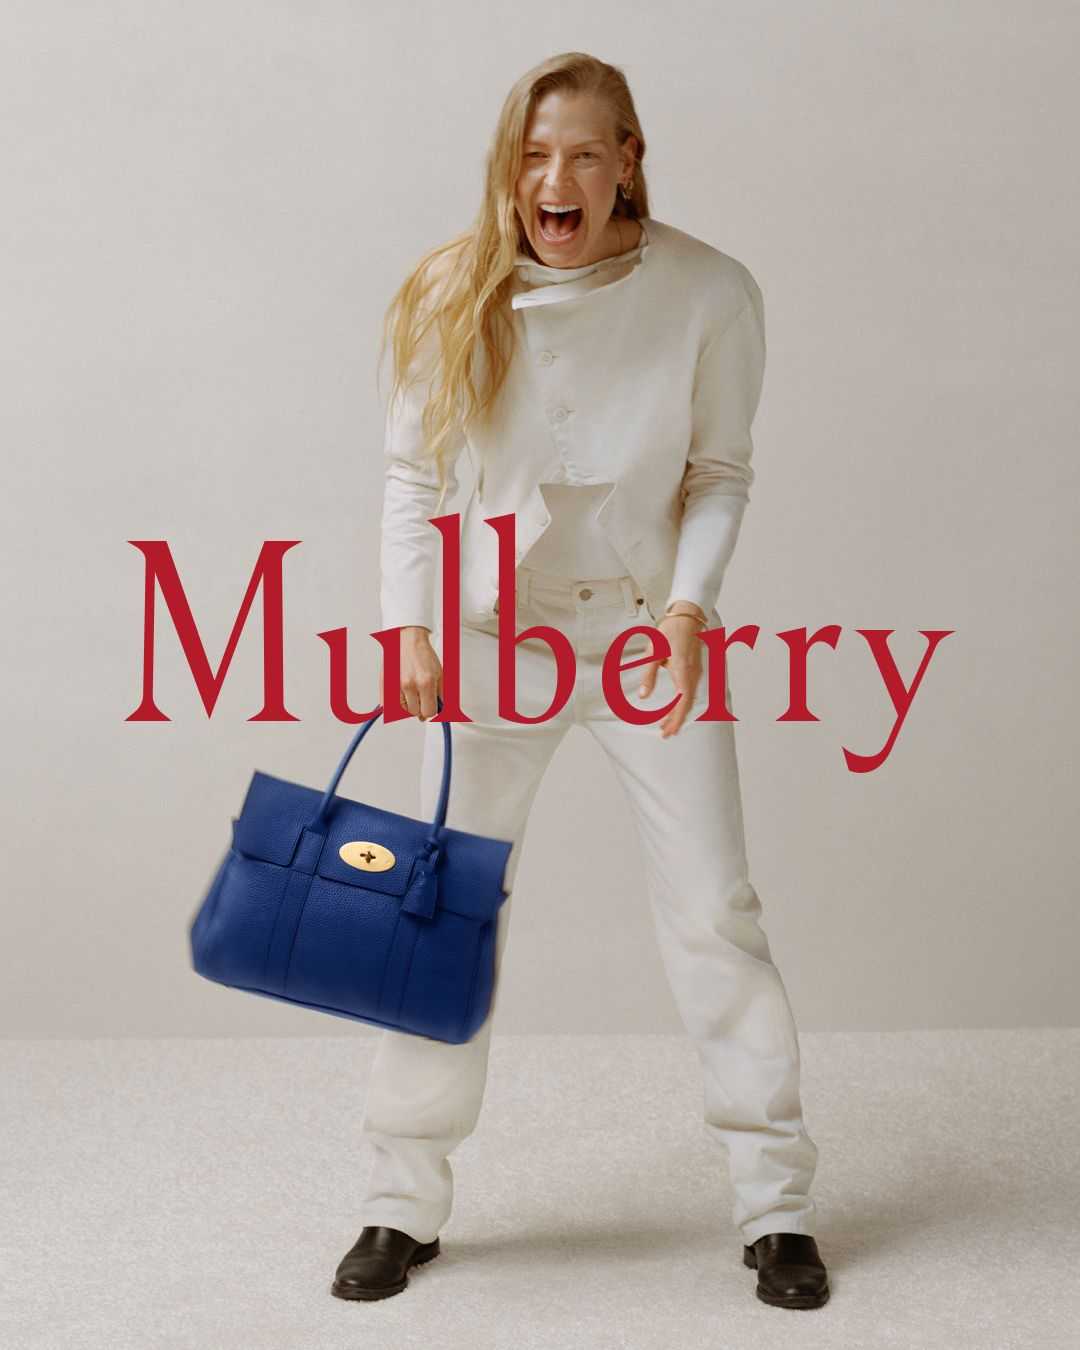 Mulberry - Ronan Mckenzie - 4860